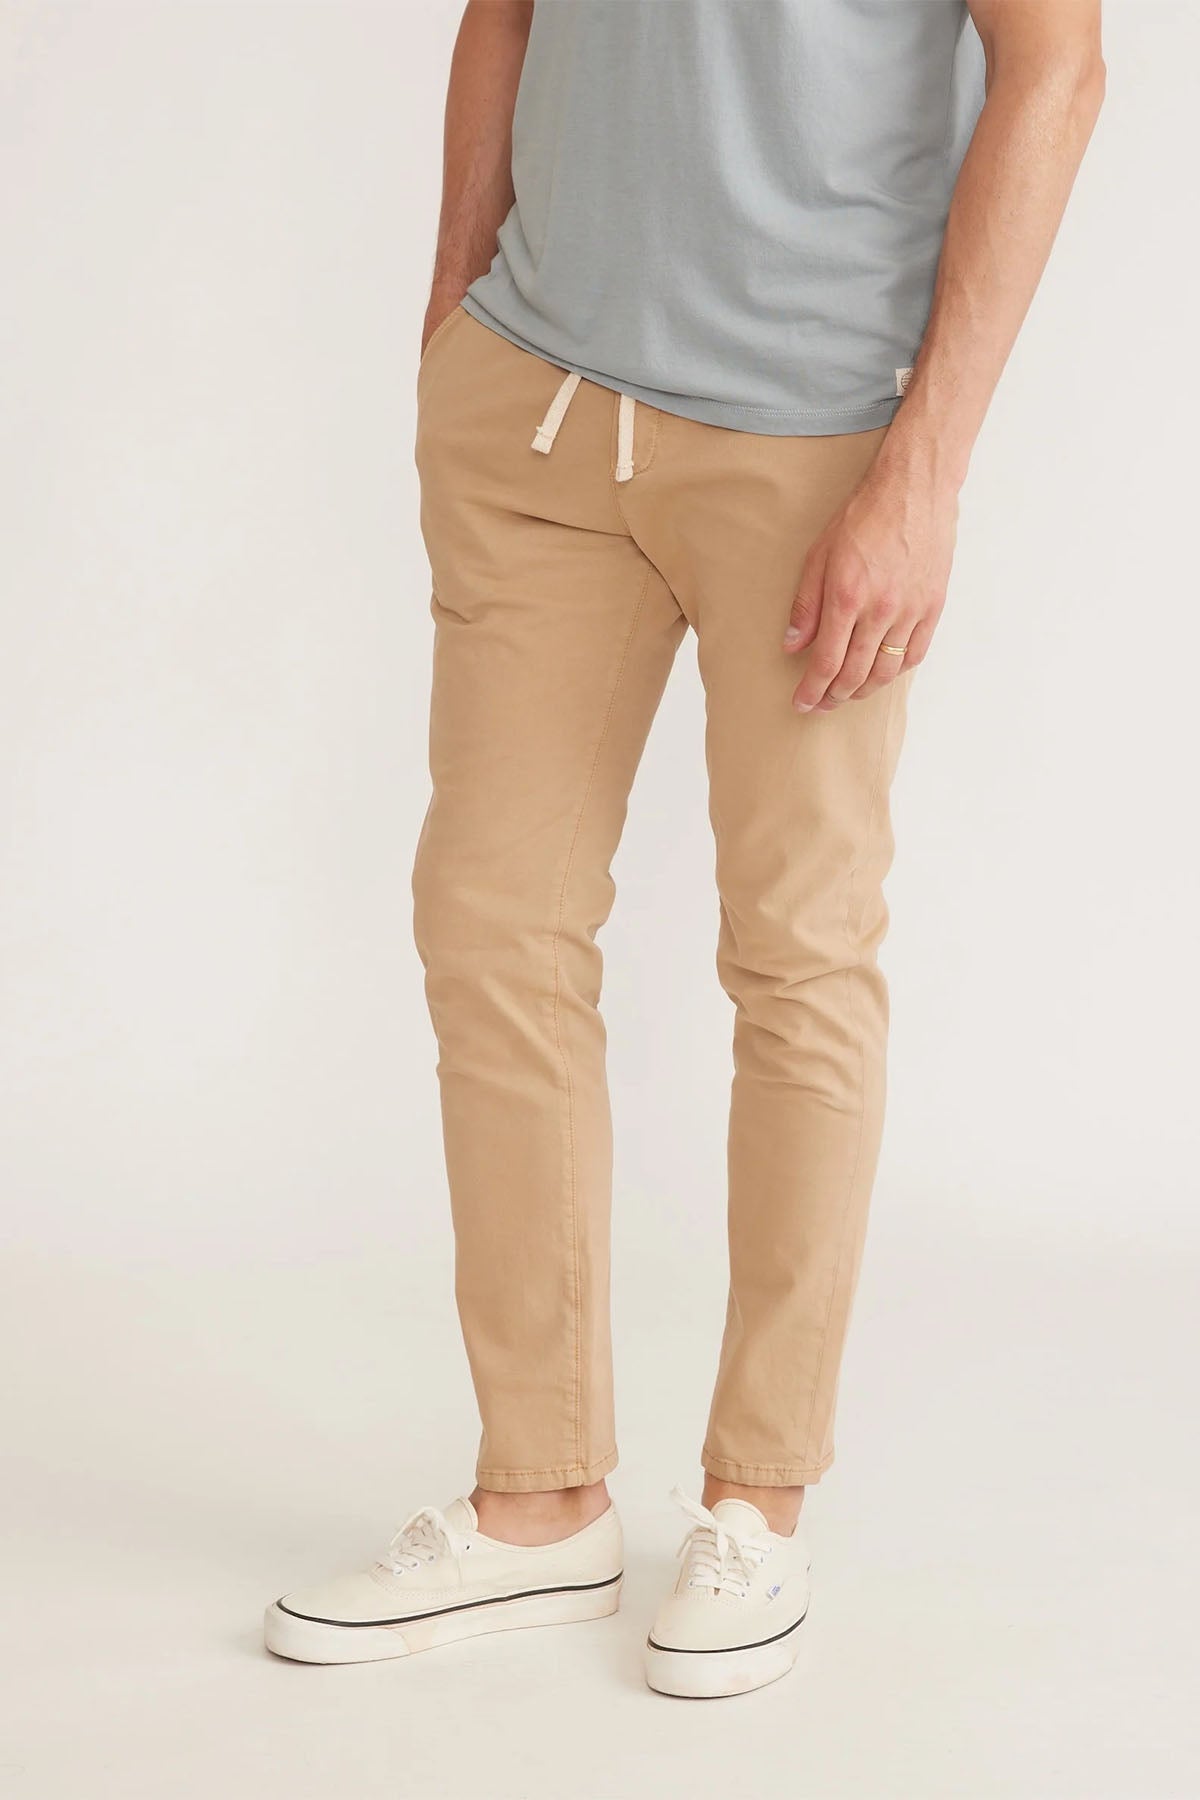 Marine Layer - Saturday Slim Fit Pant - Faded Khaki - Side